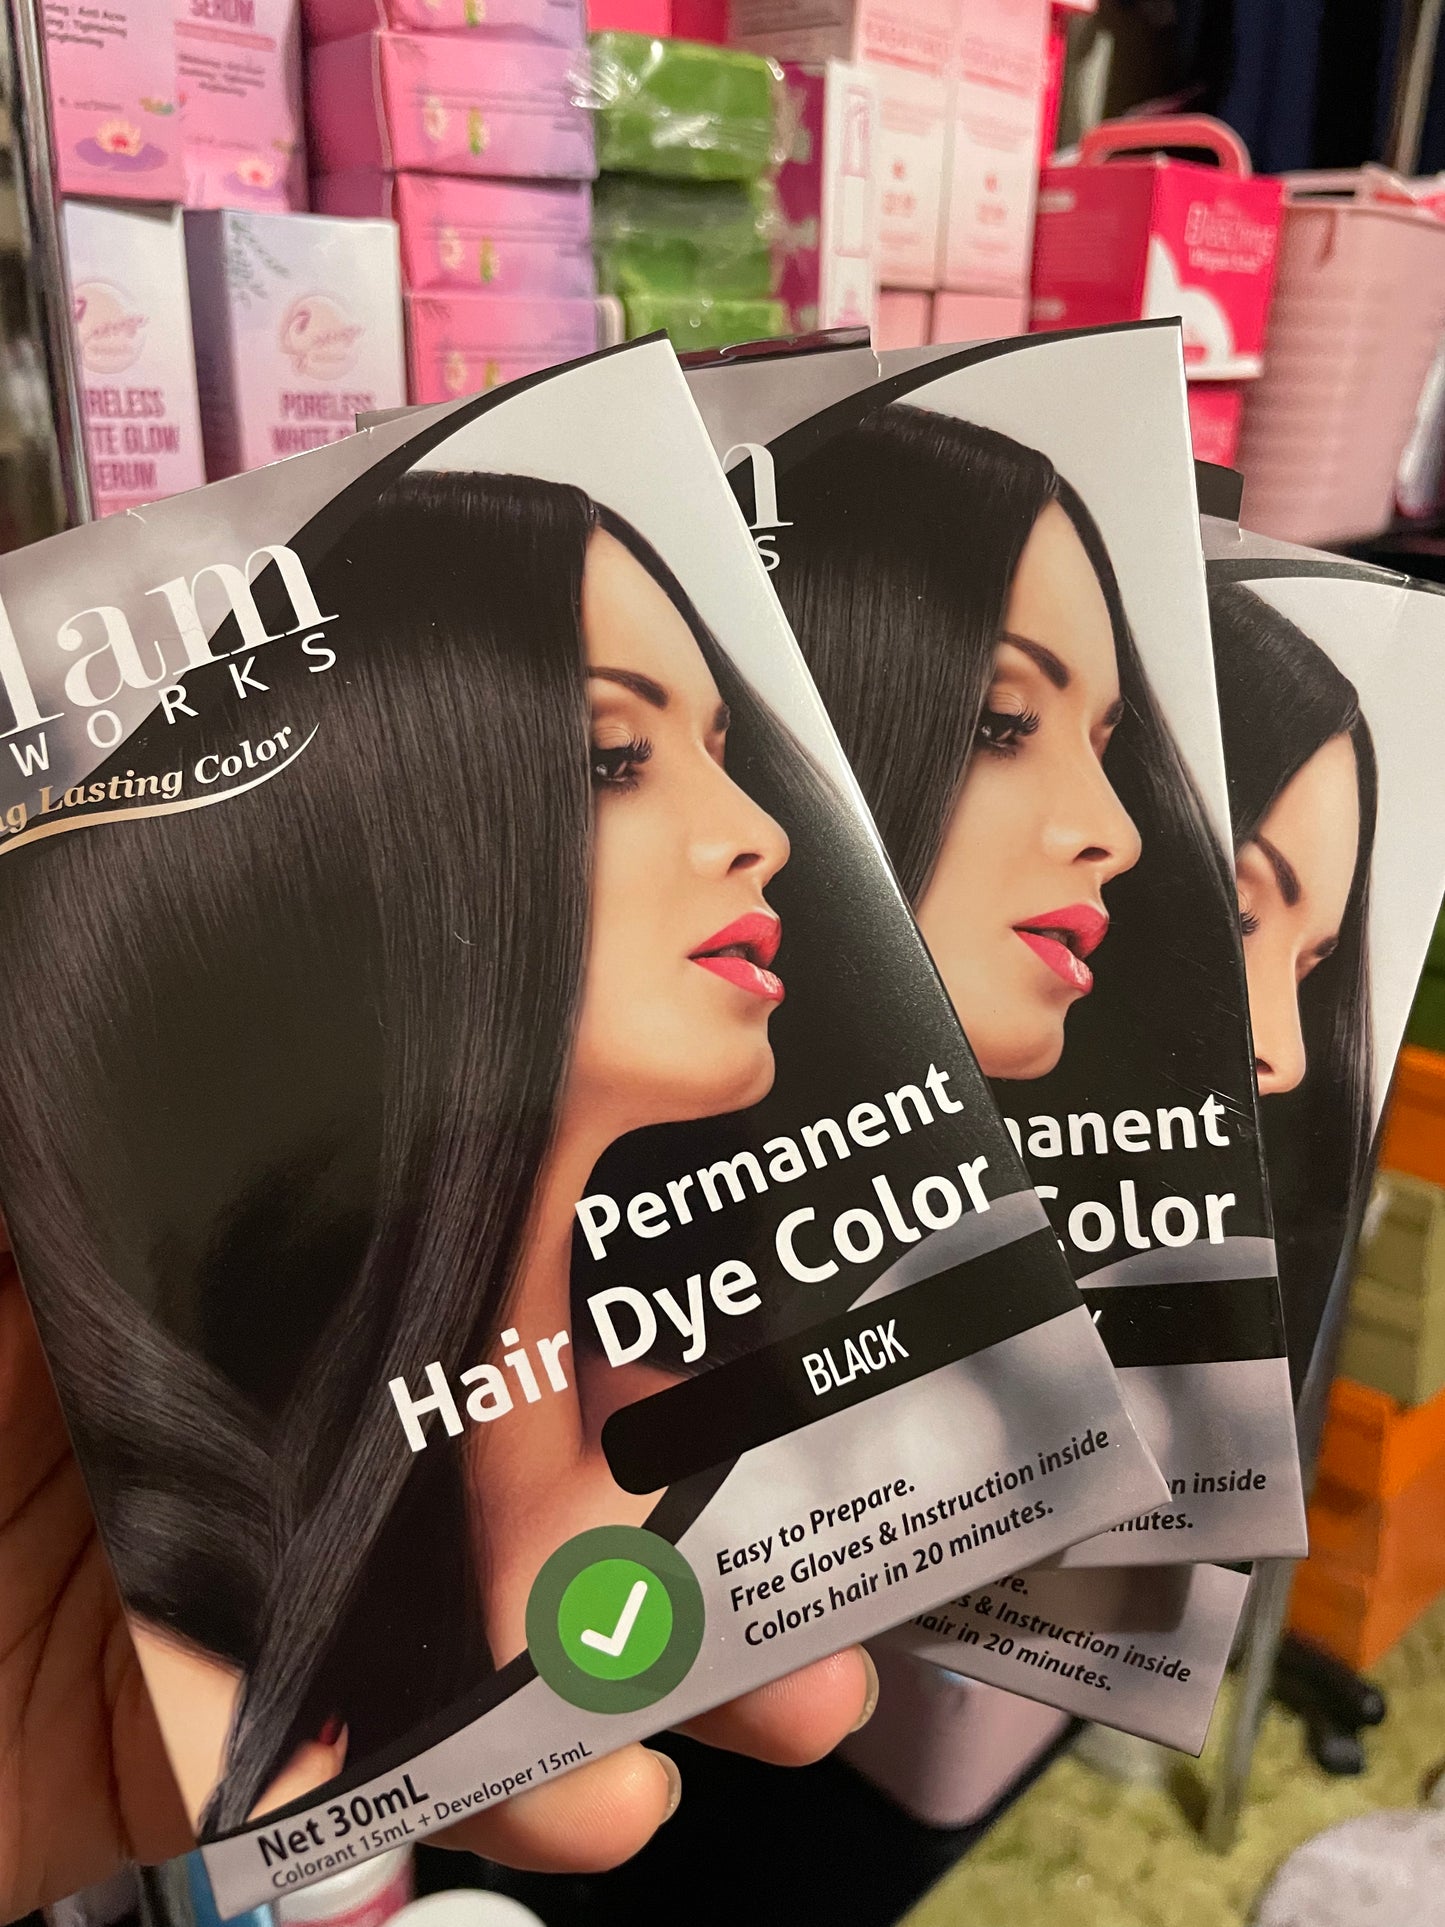 Glamworks Permanent Hair Dye Color Black 30mL